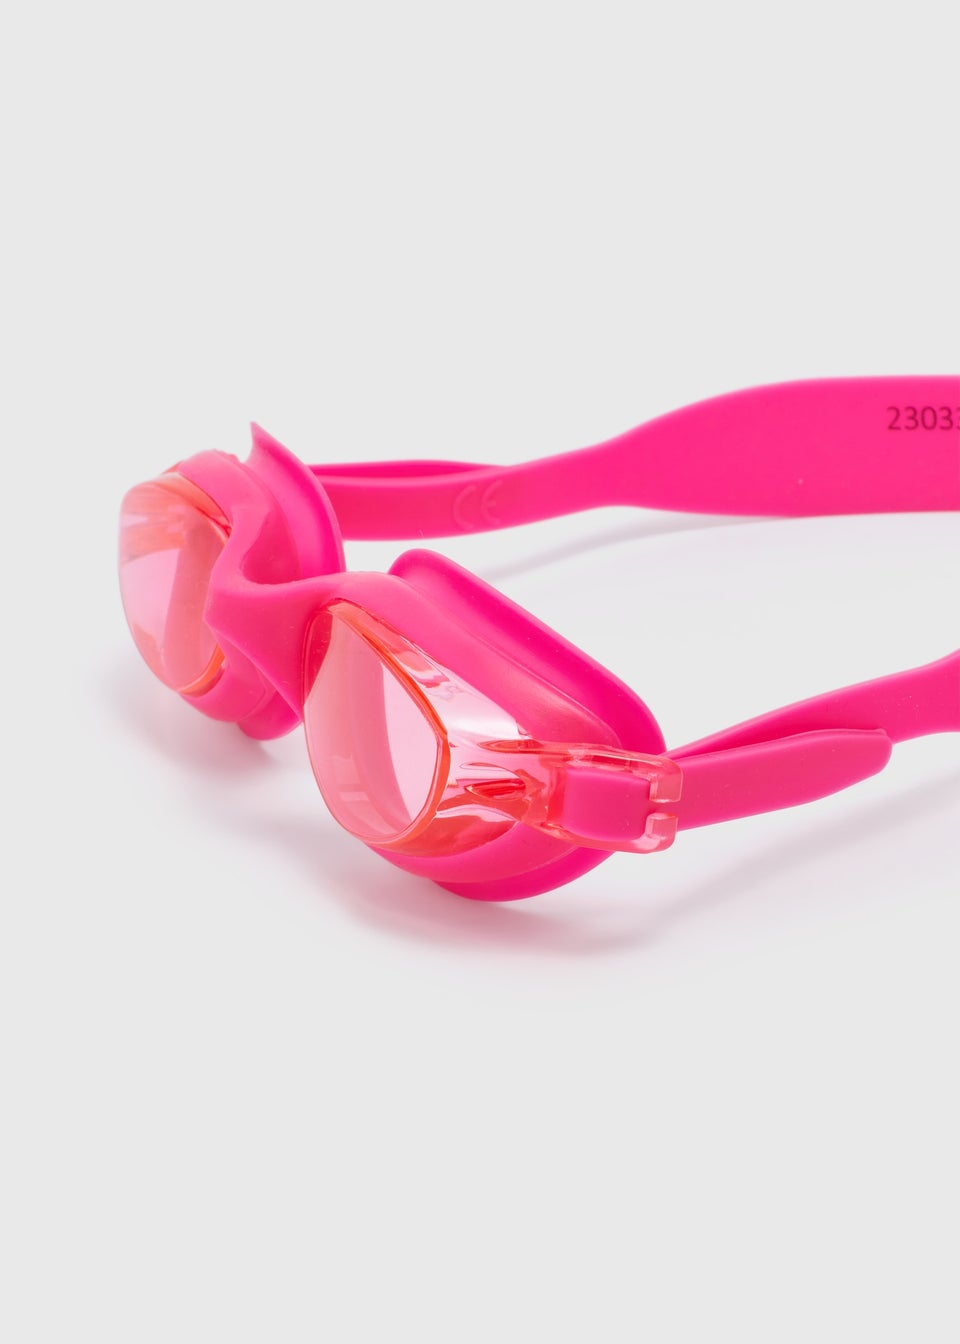 Girls Pink Swim Goggle (7-10yrs)